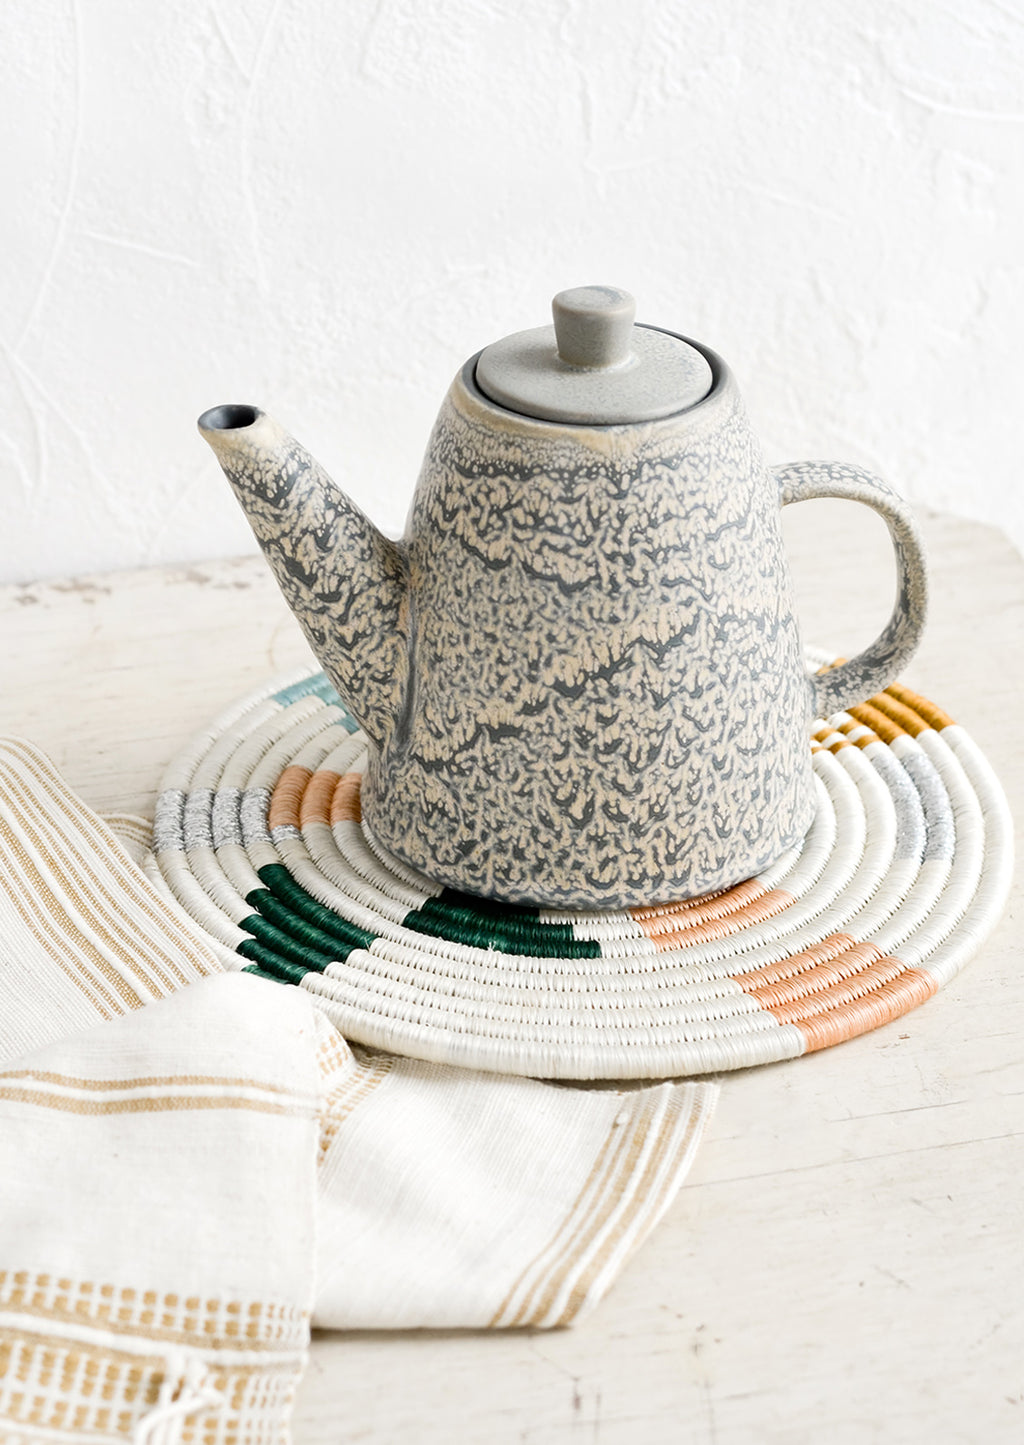 2: A grey ceramic teapot on table.